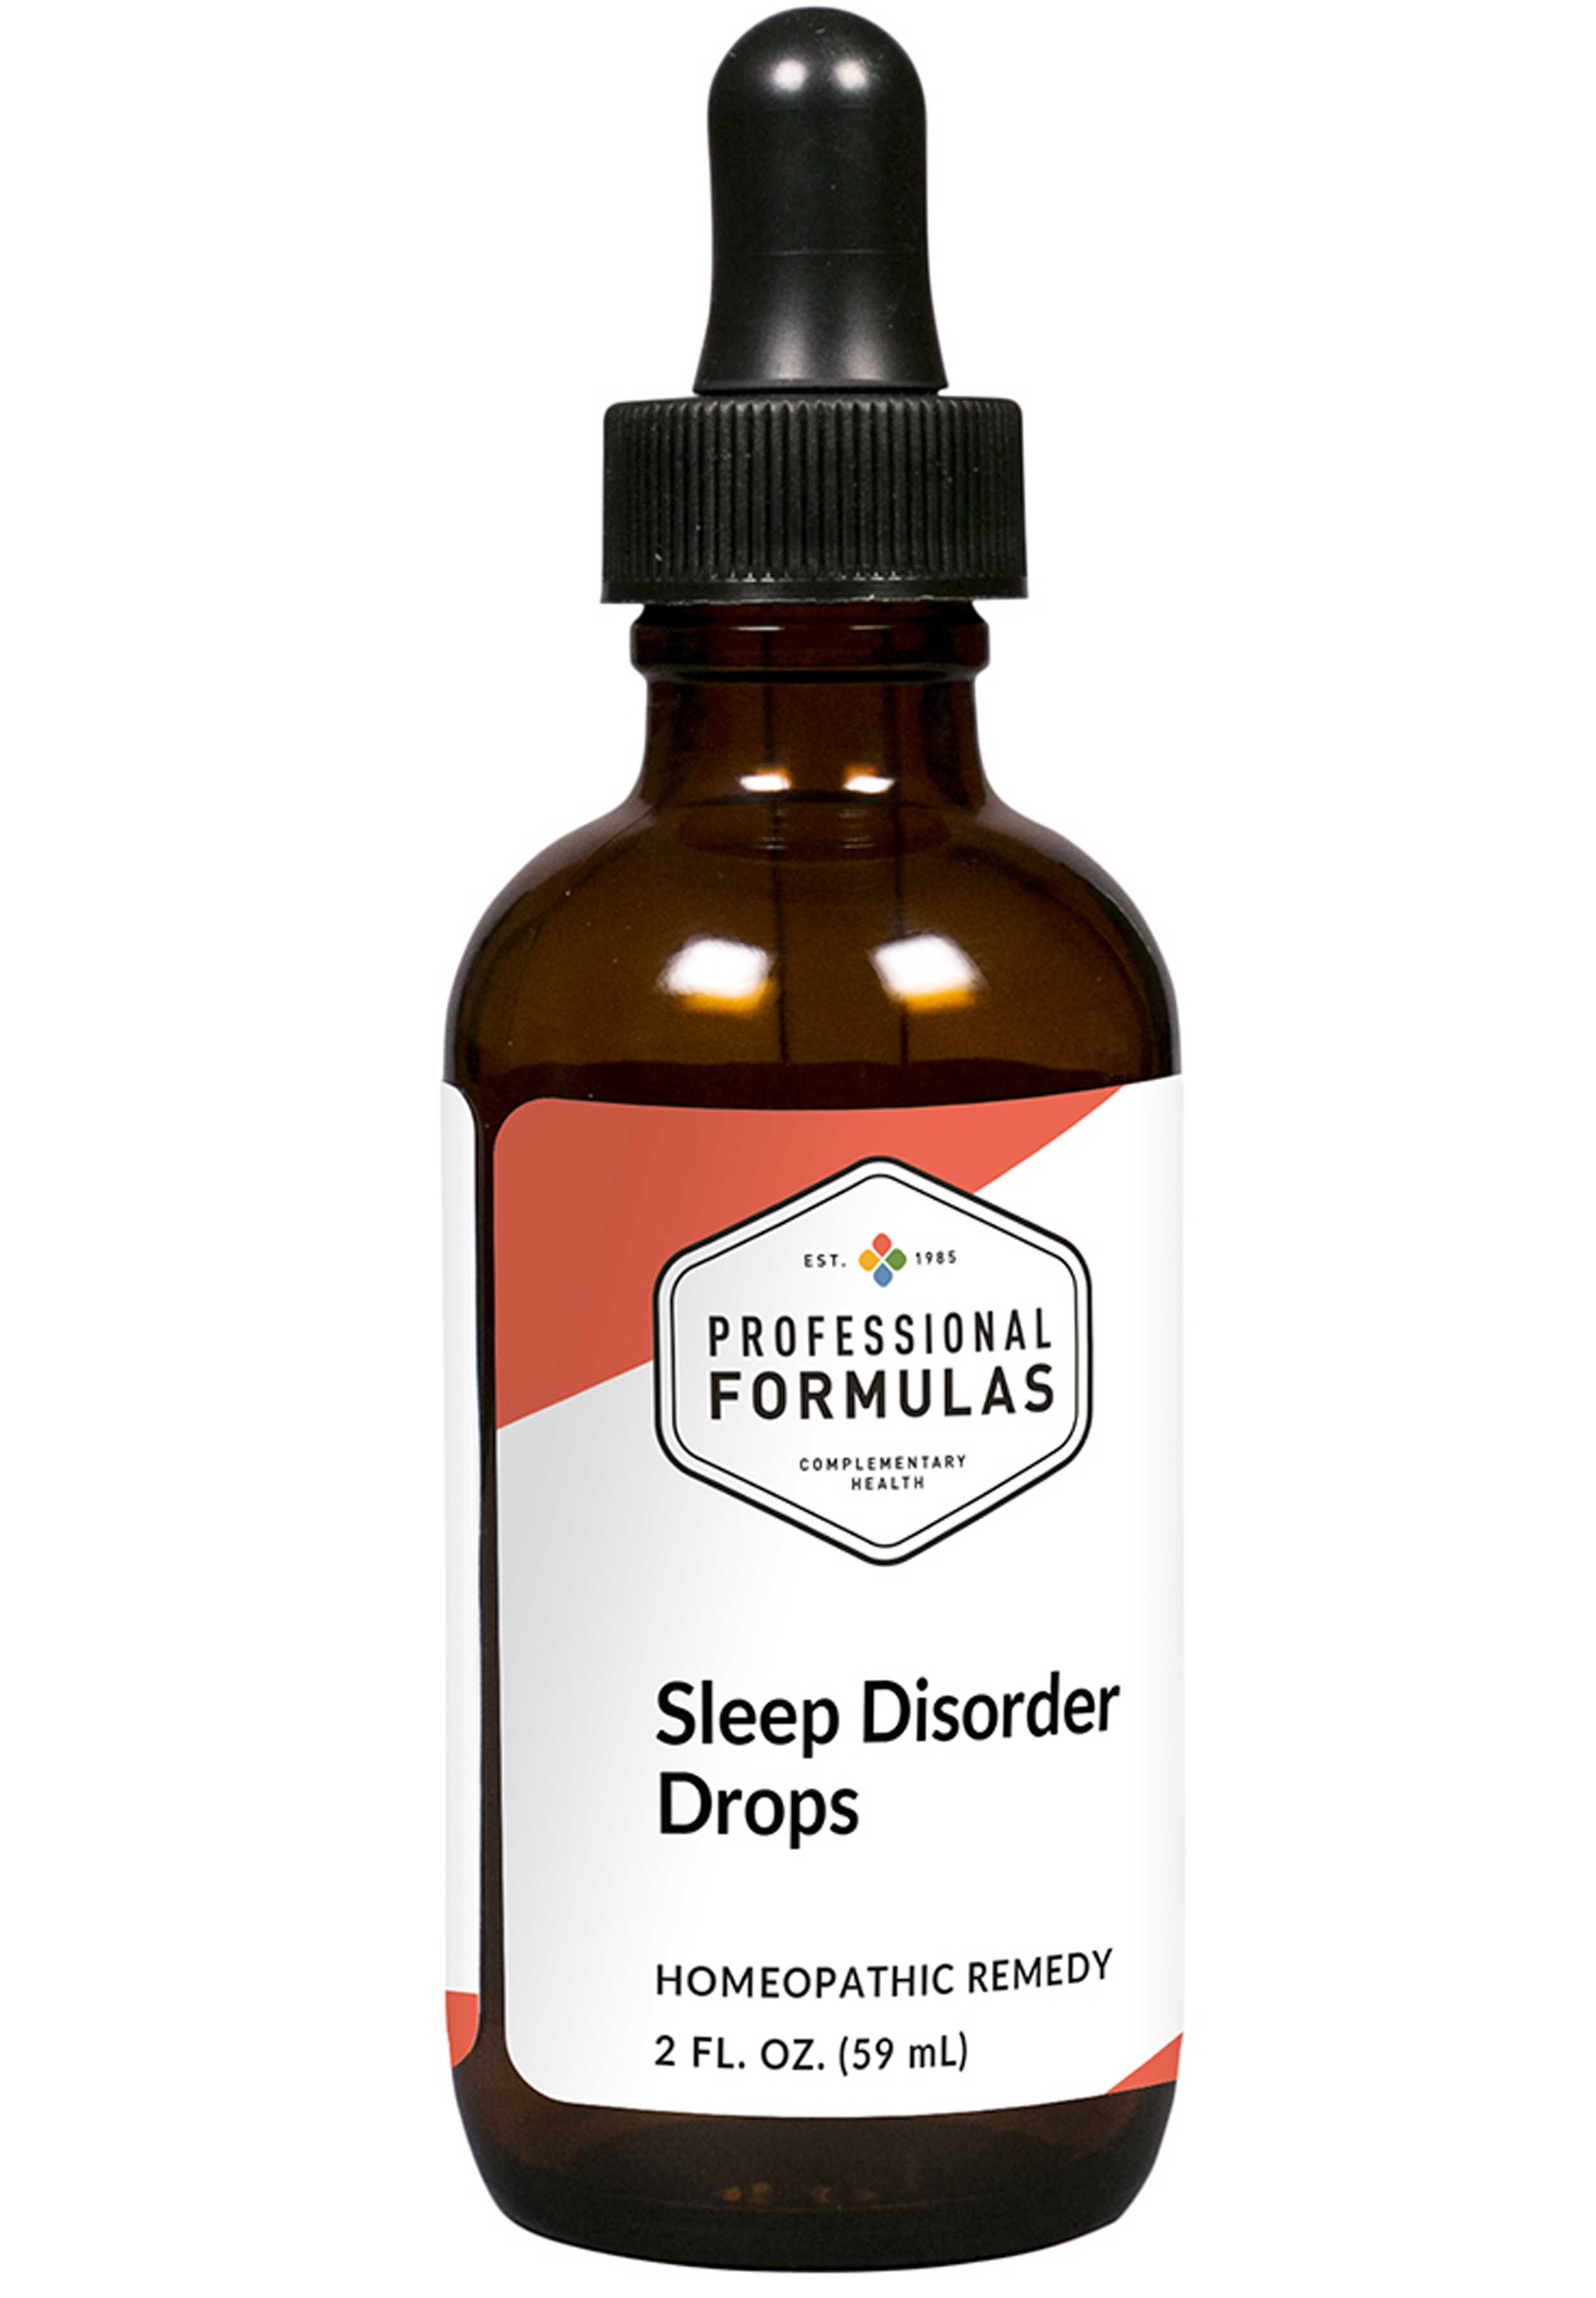 Professional Formulas Sleep Disorder Drops